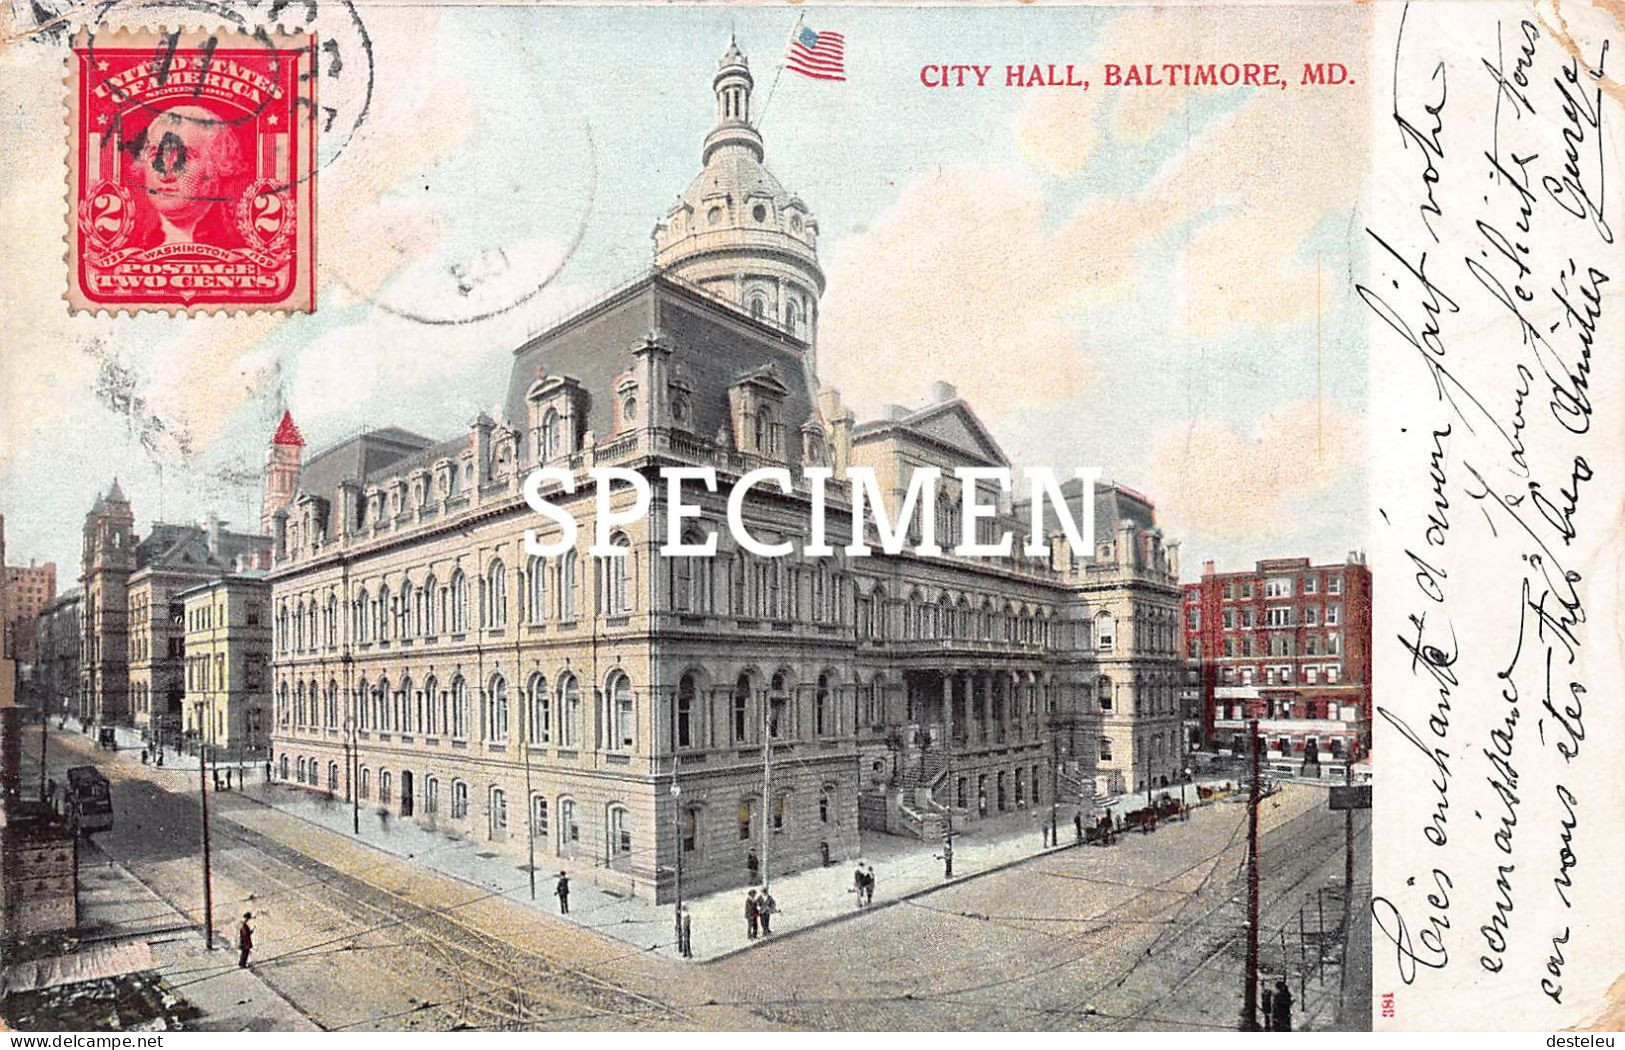 City Hall - Baltimore MD - Baltimore